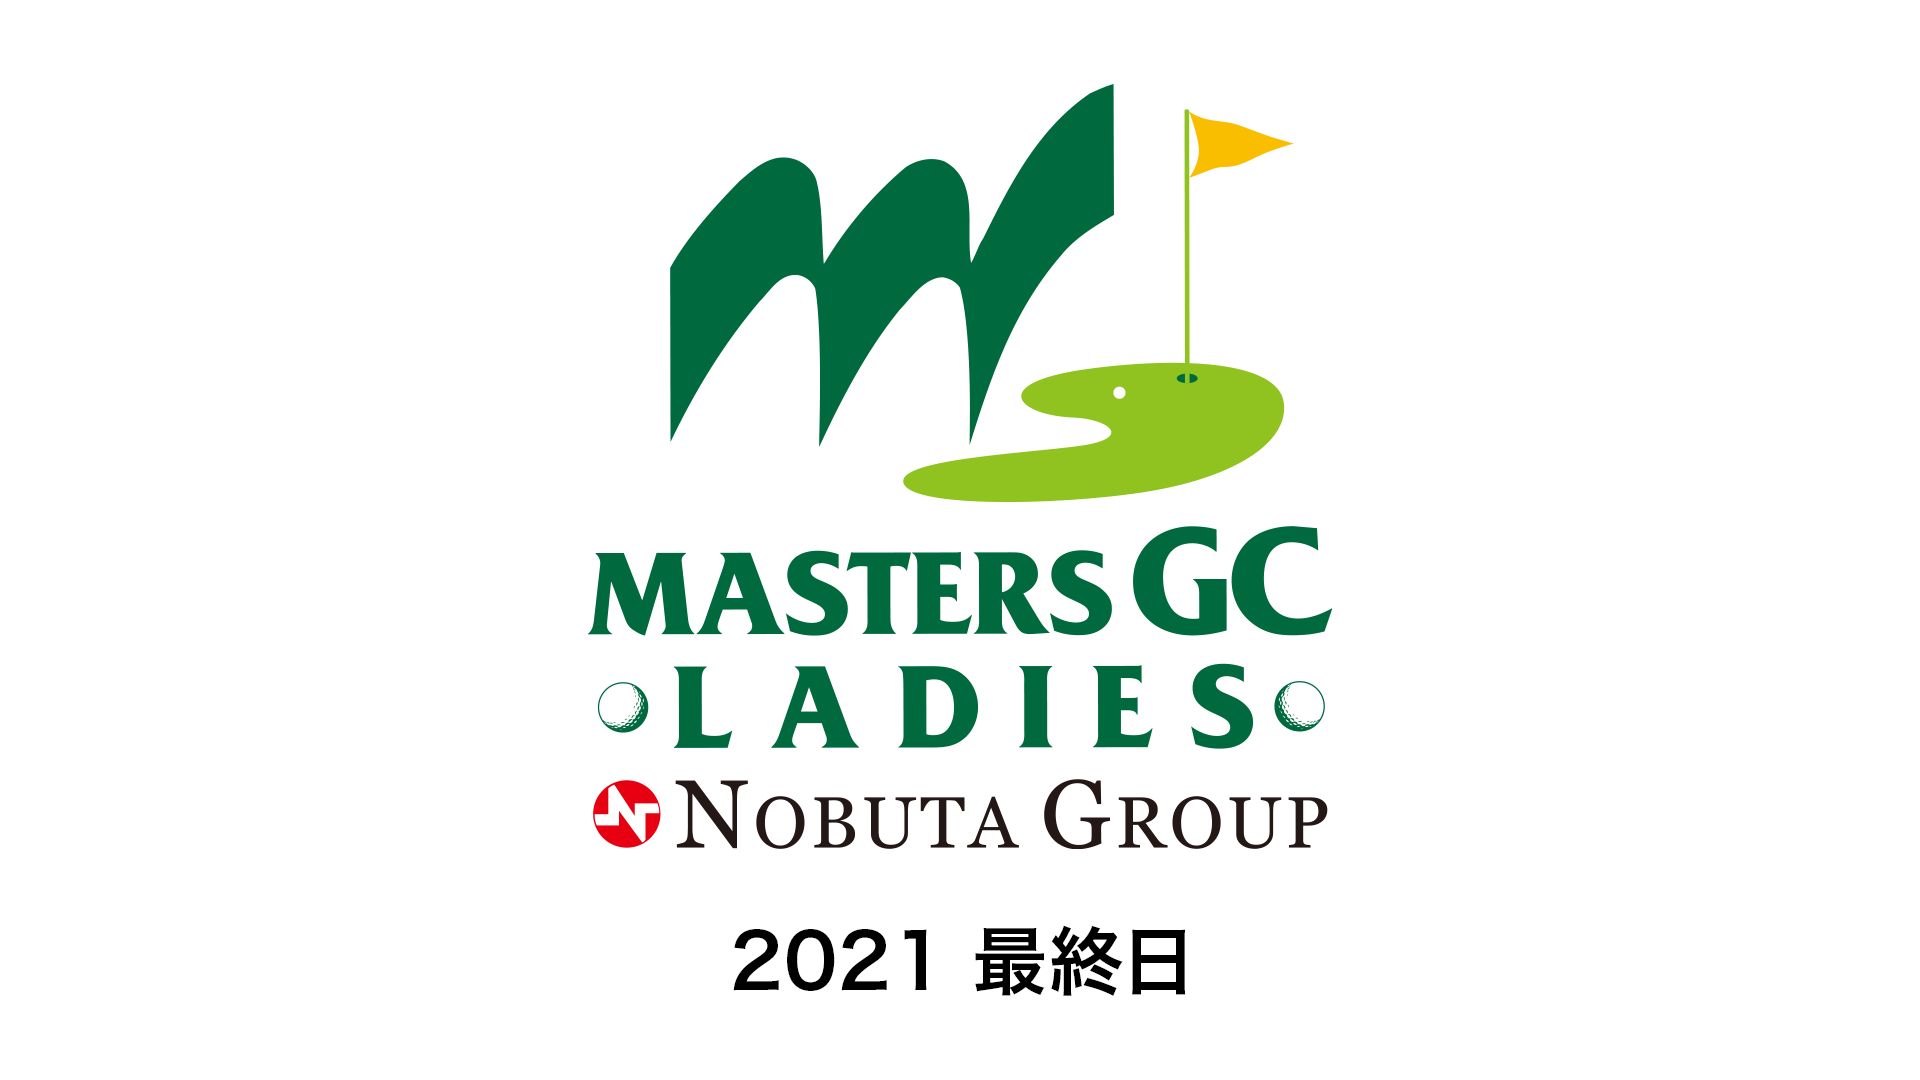 NOBUTA GROUP マスターズGC レディース2021 最終日